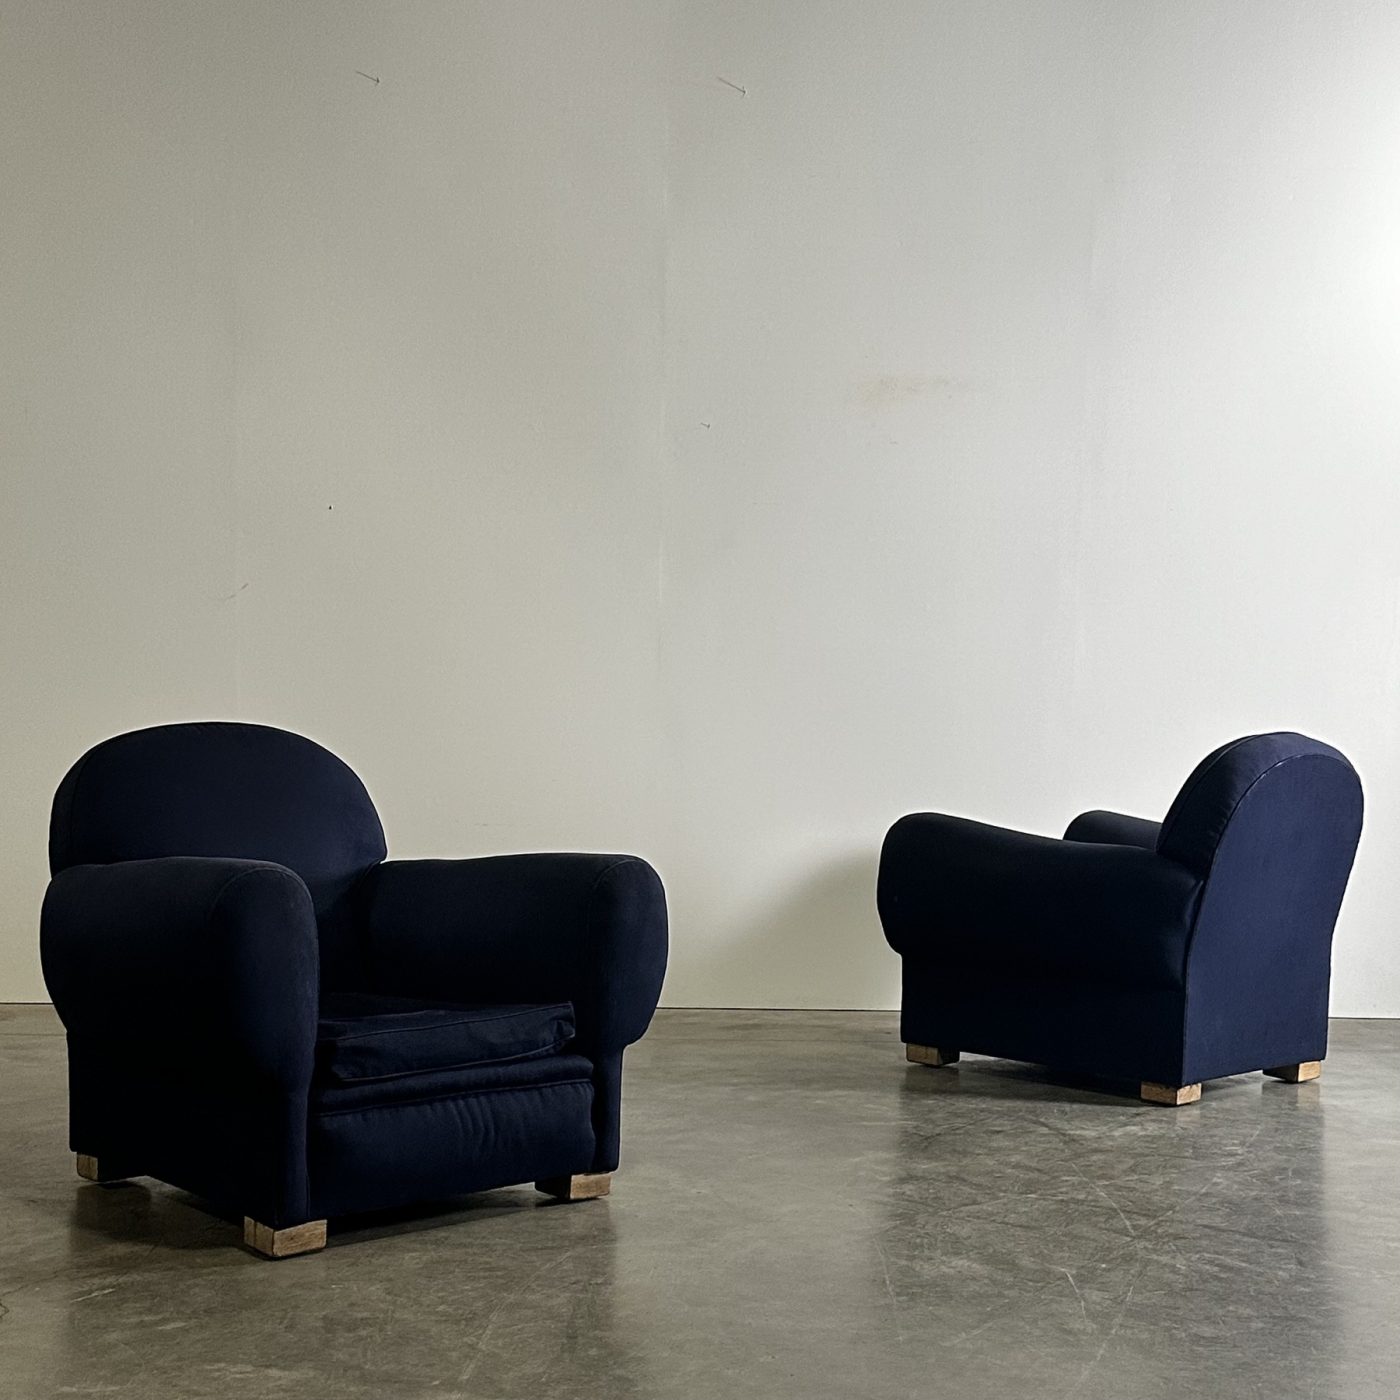 objet-vagabond-club-chairs0007